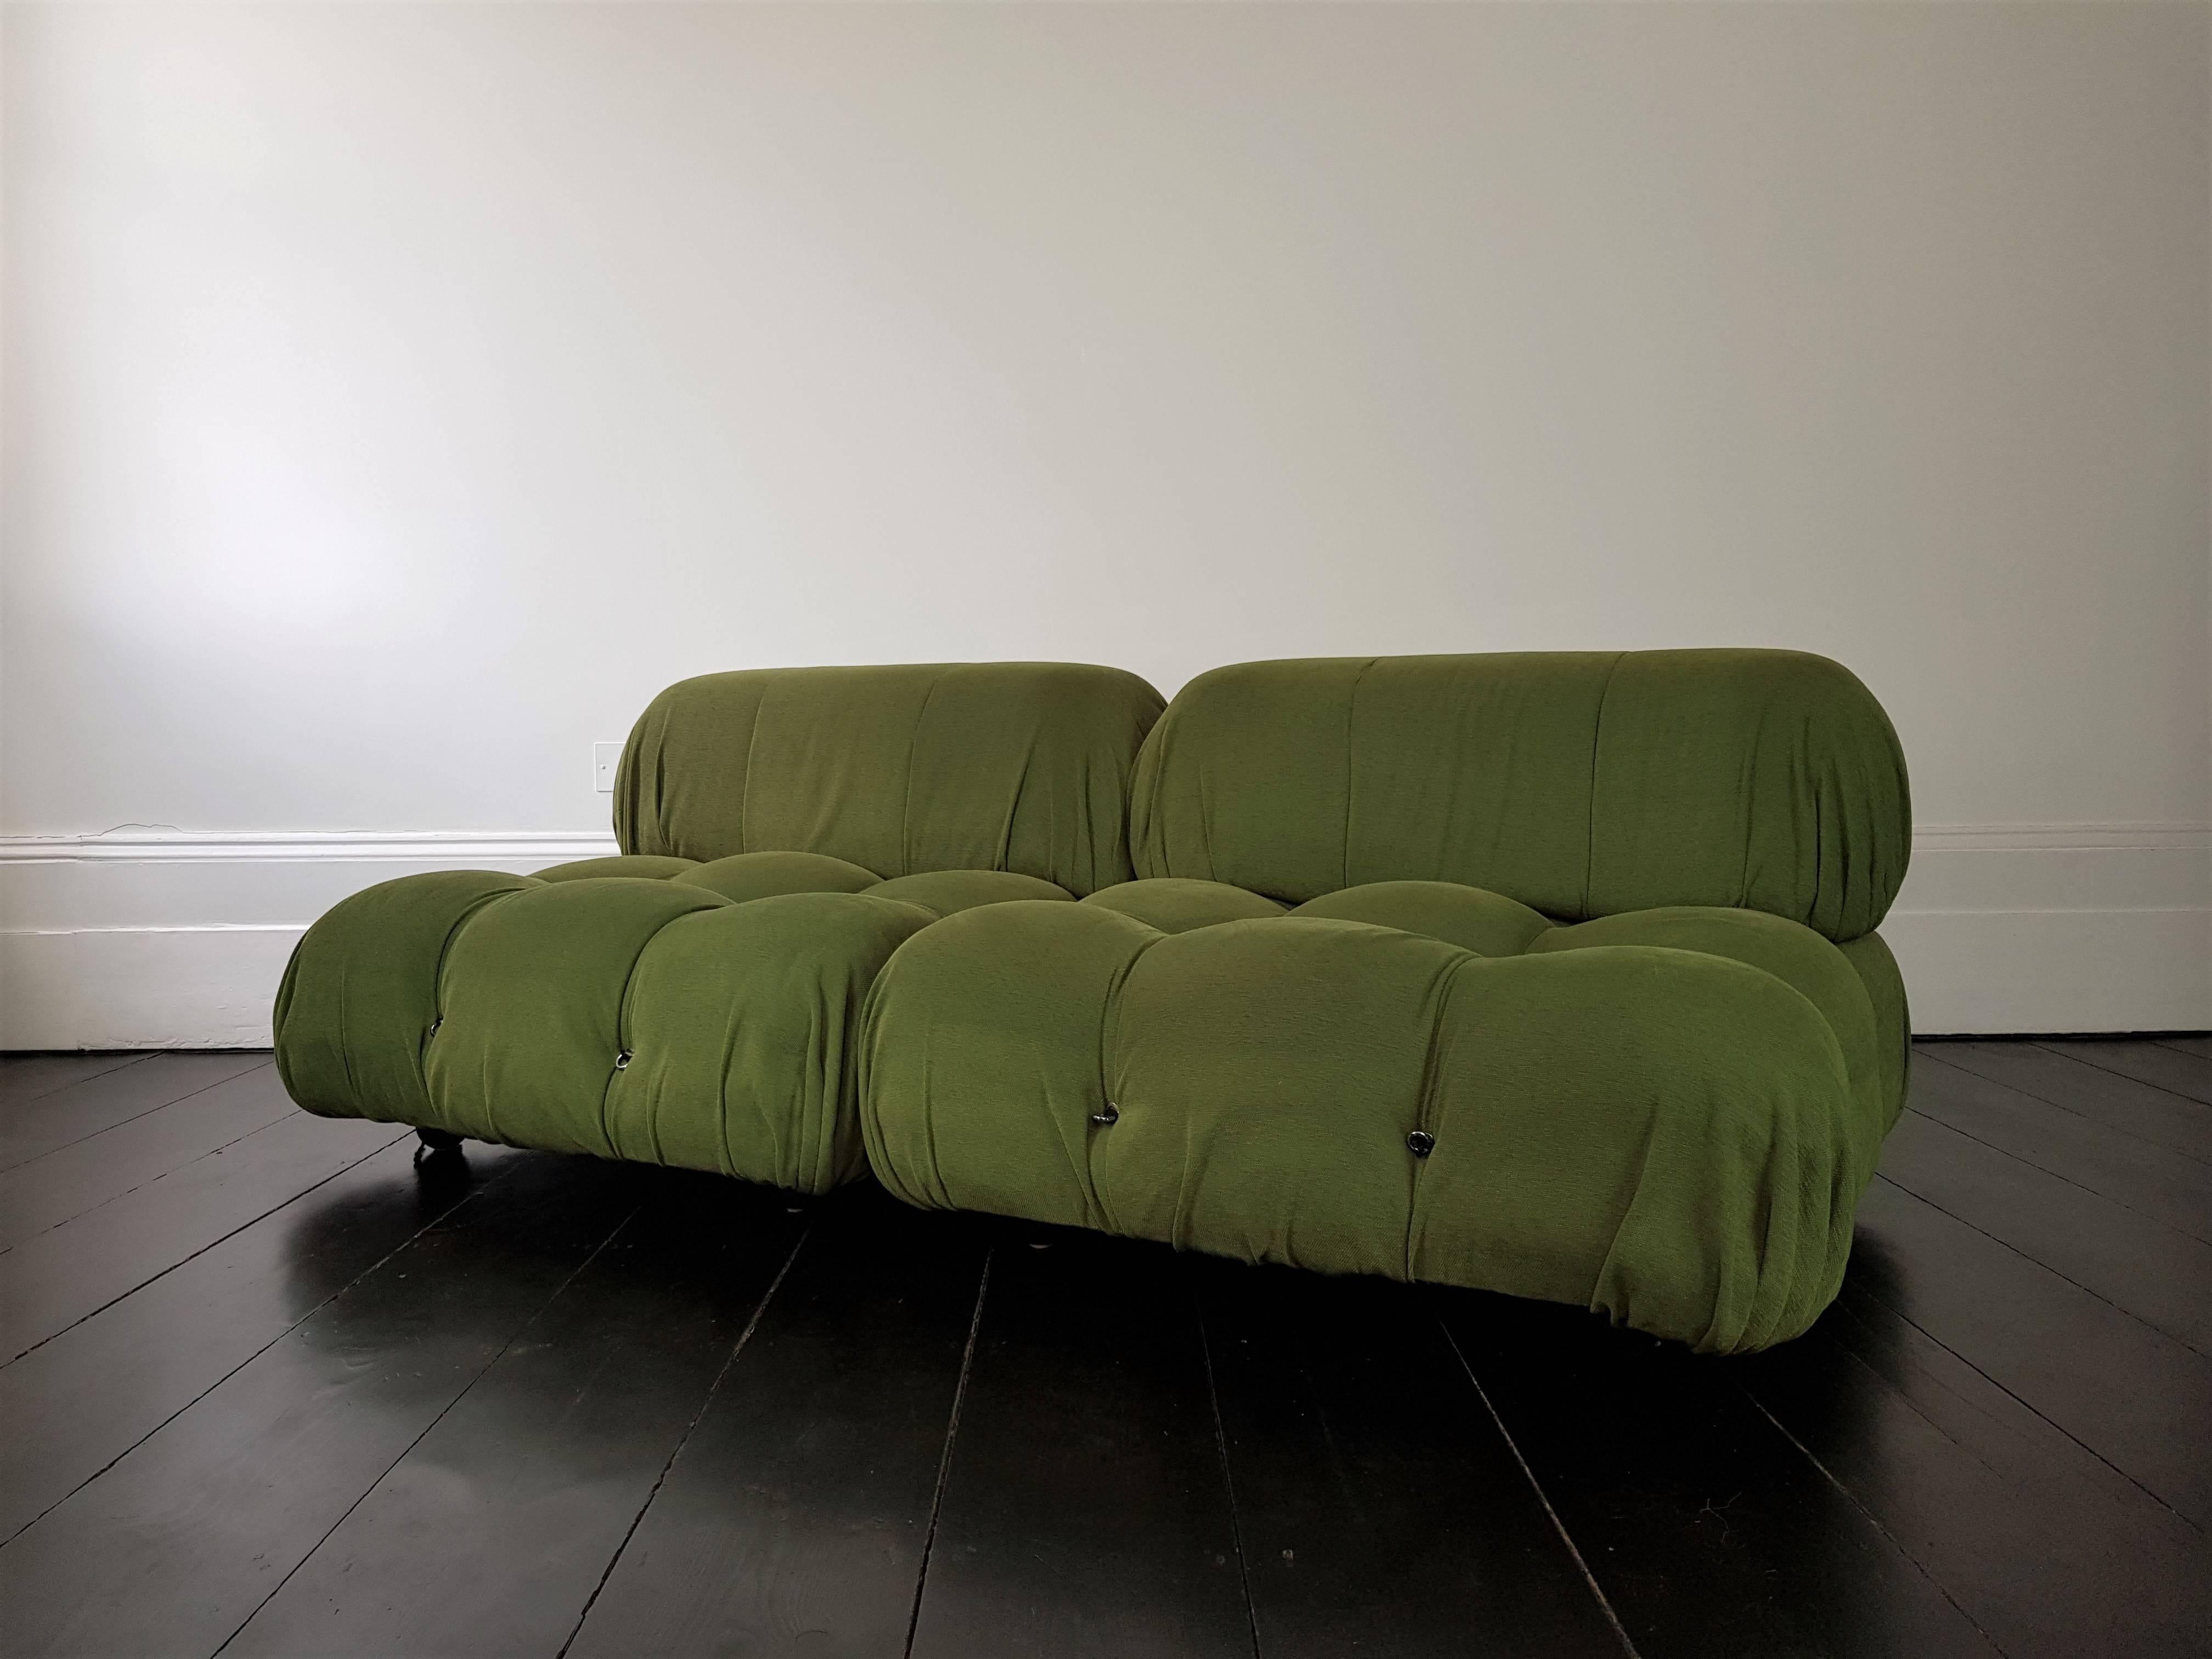 Italian Mario Bellini 'Camaleonda' Modular Sofa with Original Fabric, Designed 1971